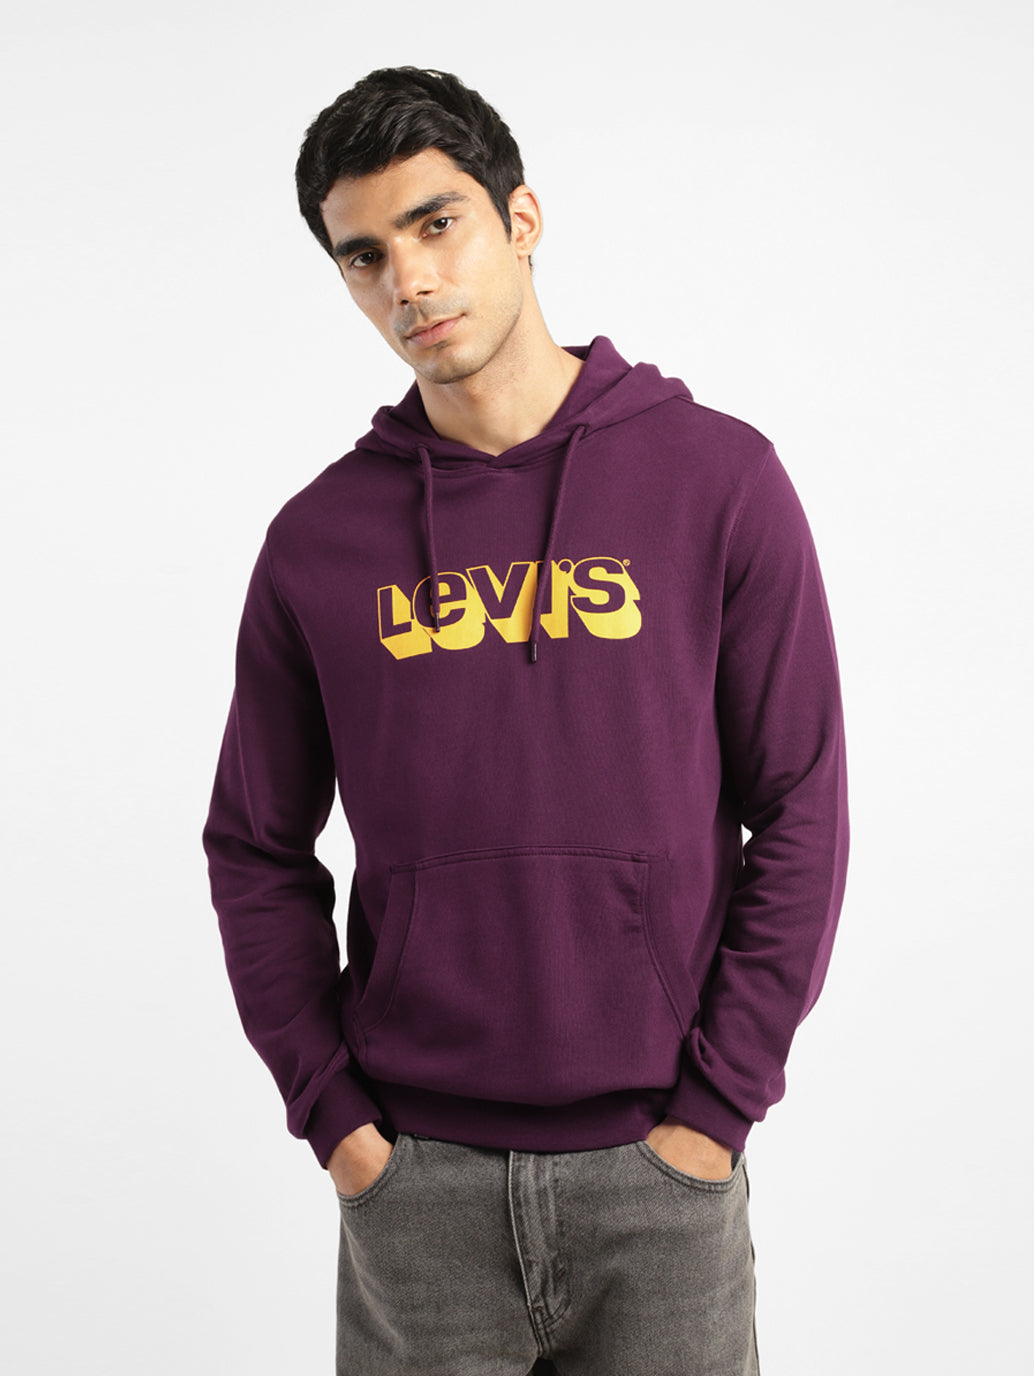 Men's Graphic Hoodies & Sweatshirts, Printed & Logo